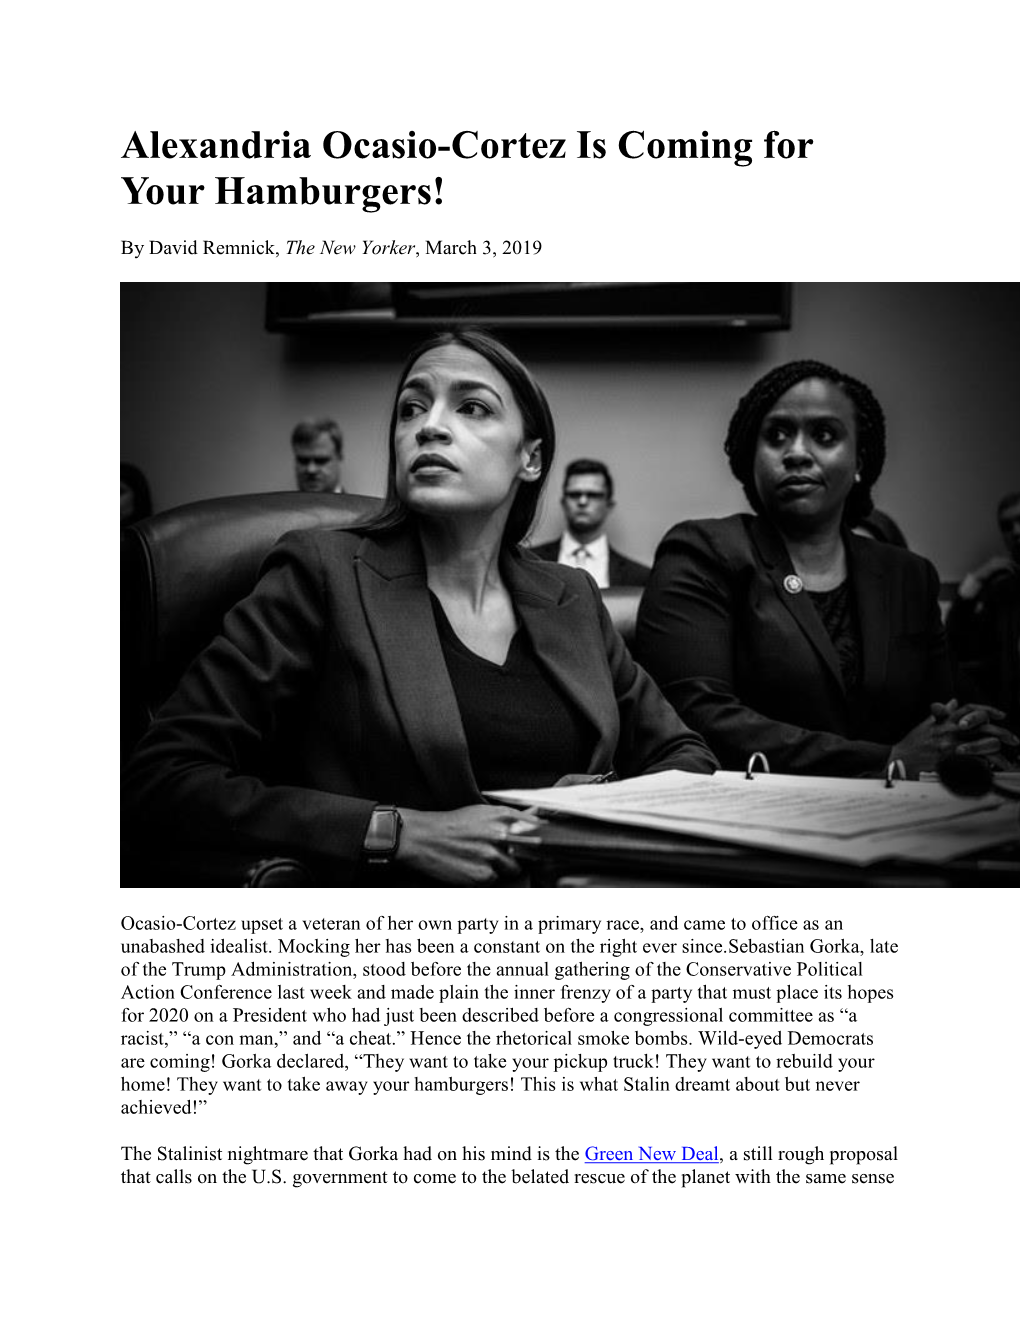 Alexandria Ocasio-Cortez Is Coming for Your Hamburgers!